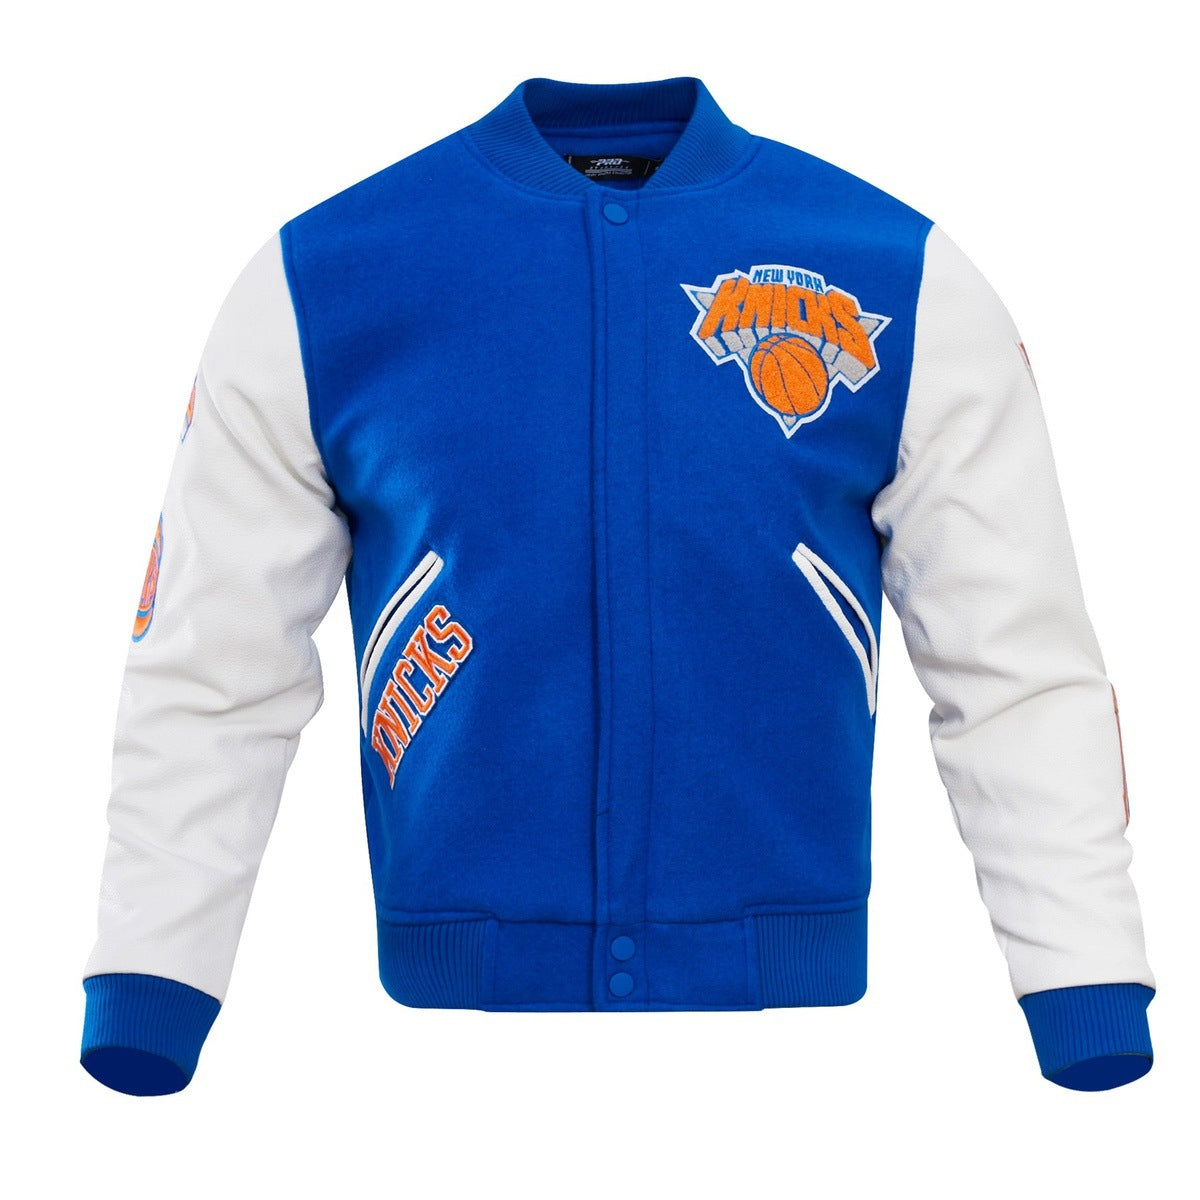 New York Yankees Pro Standard Mash Up Logo Varsity Full-Zip Jacket